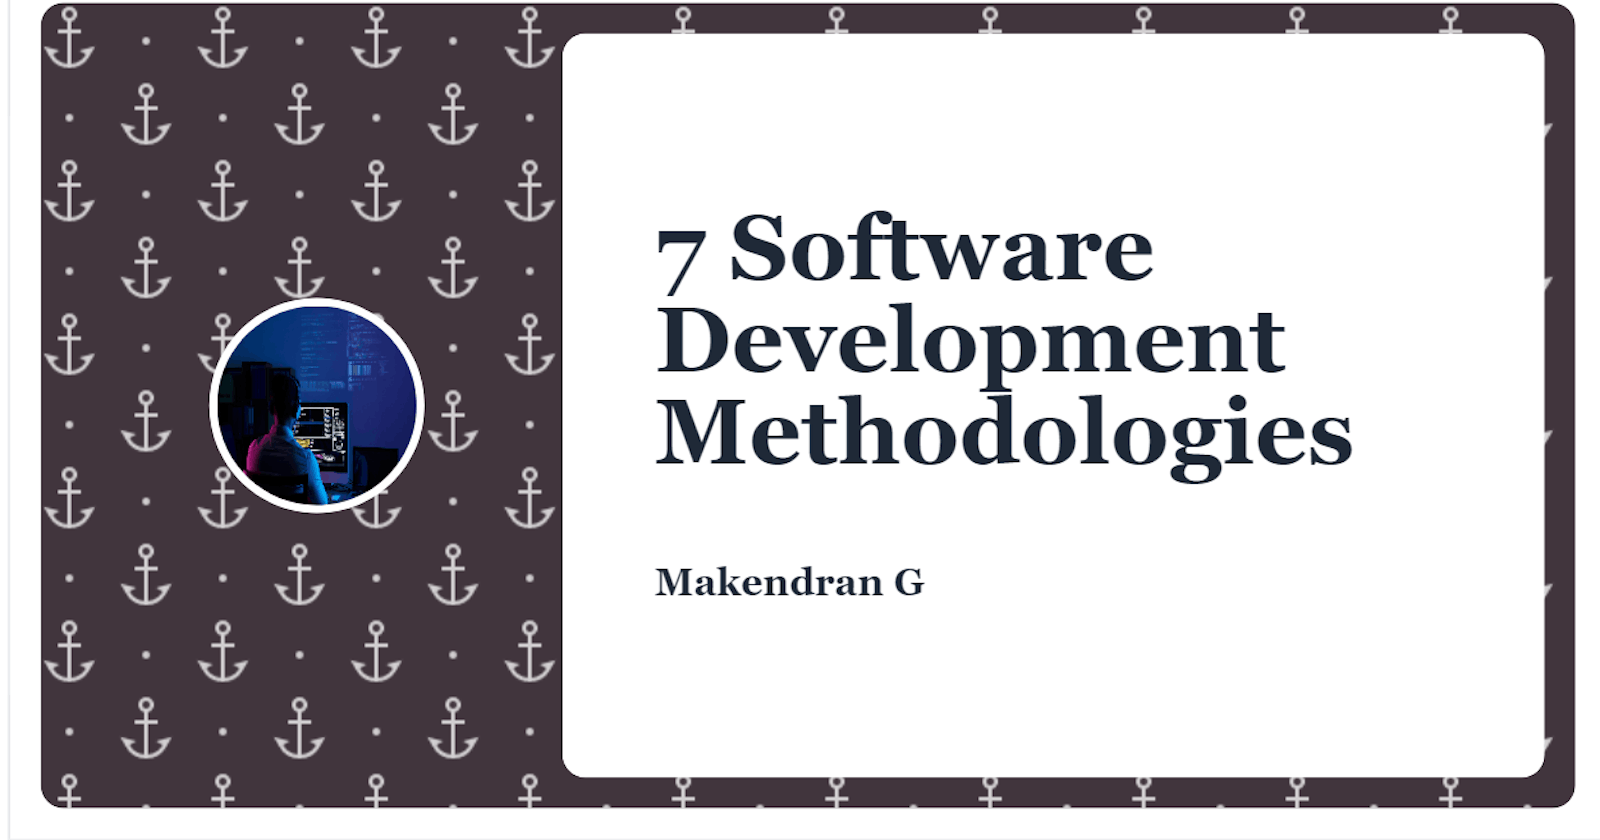 7 Software Development Methodologies